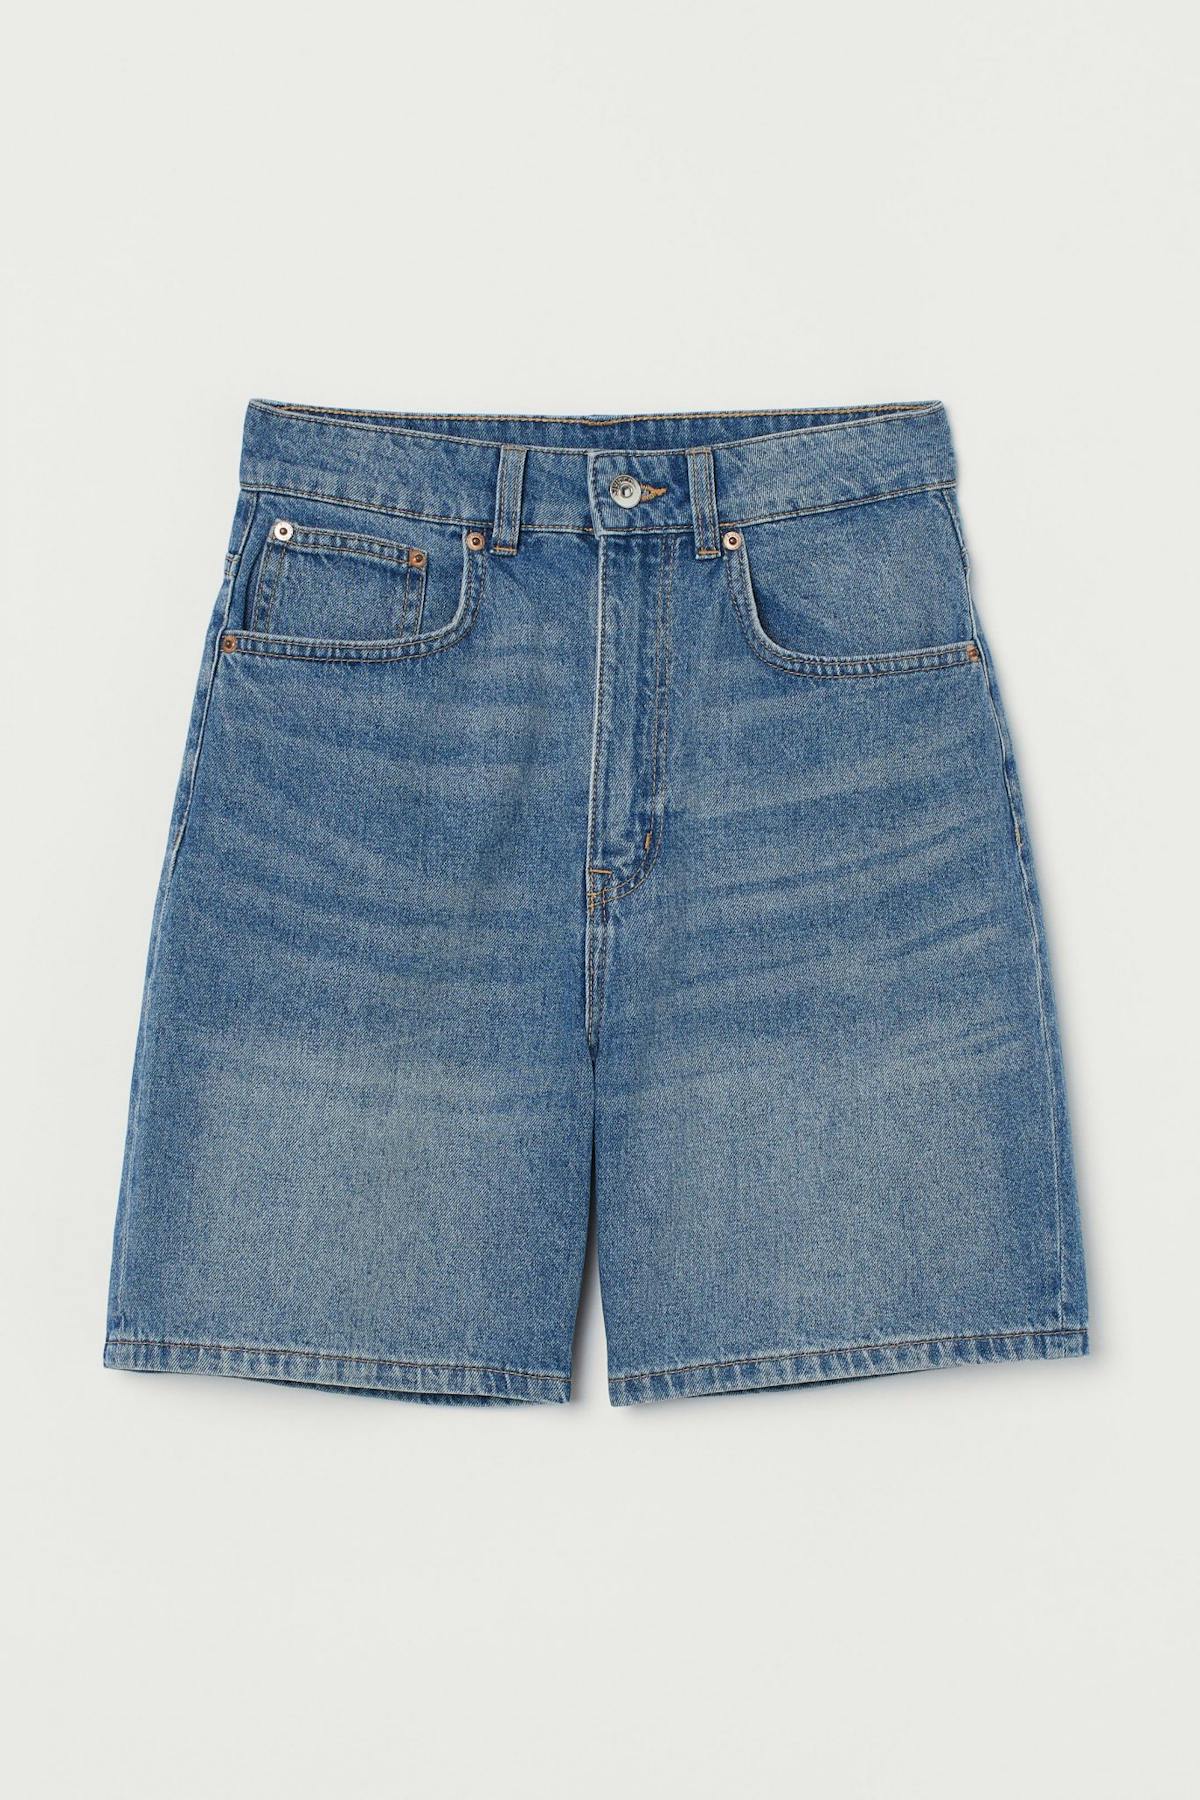 Best denim shorts for women to wear all summer 2020